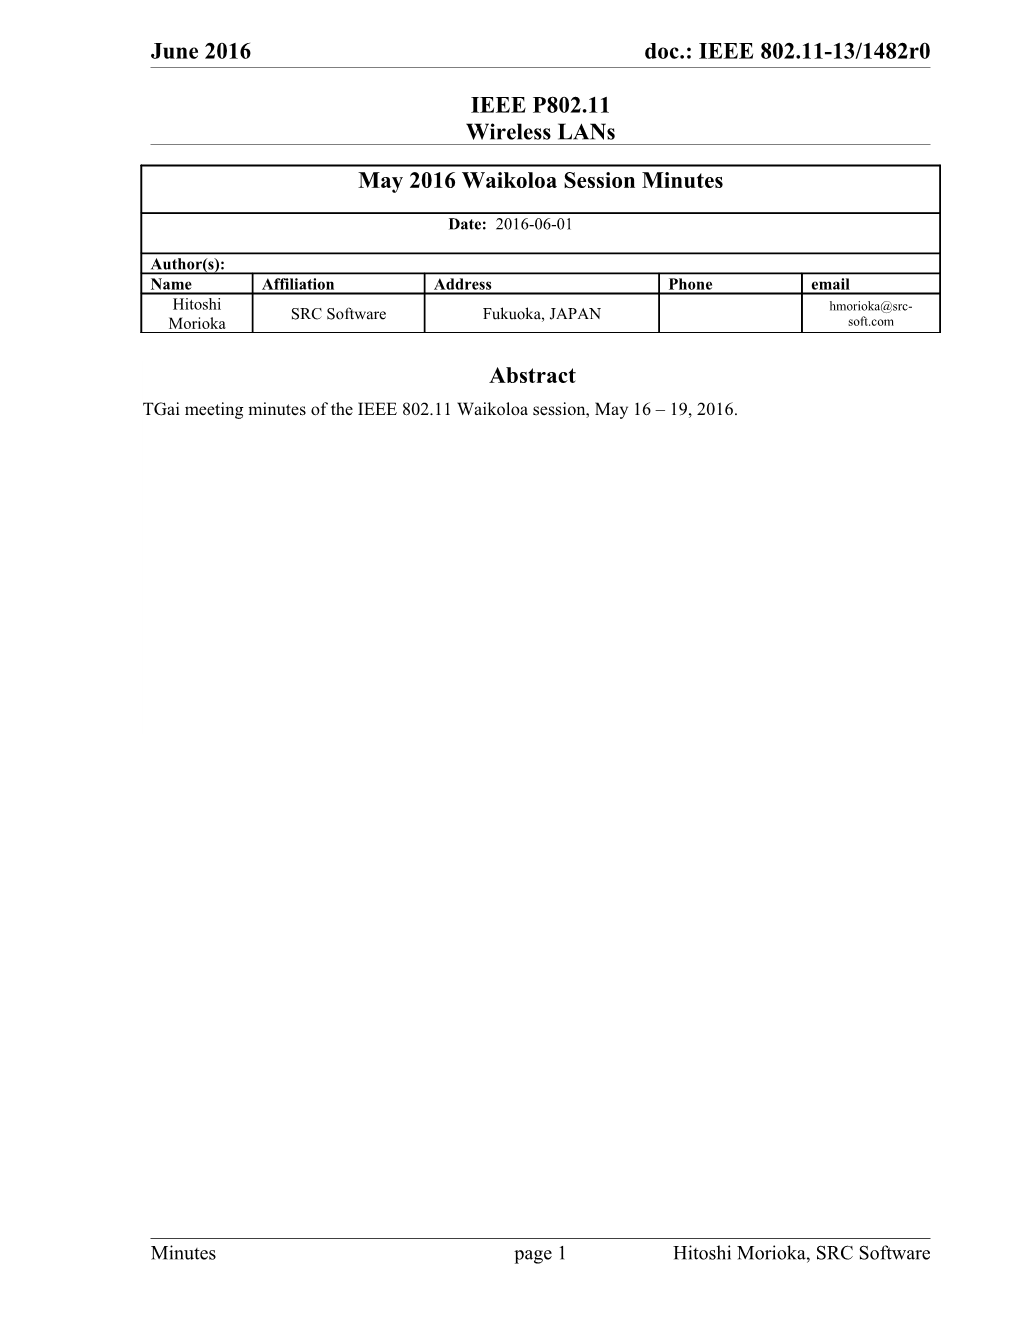 Tgai May 2016 Waikoloa Meeting Minutes